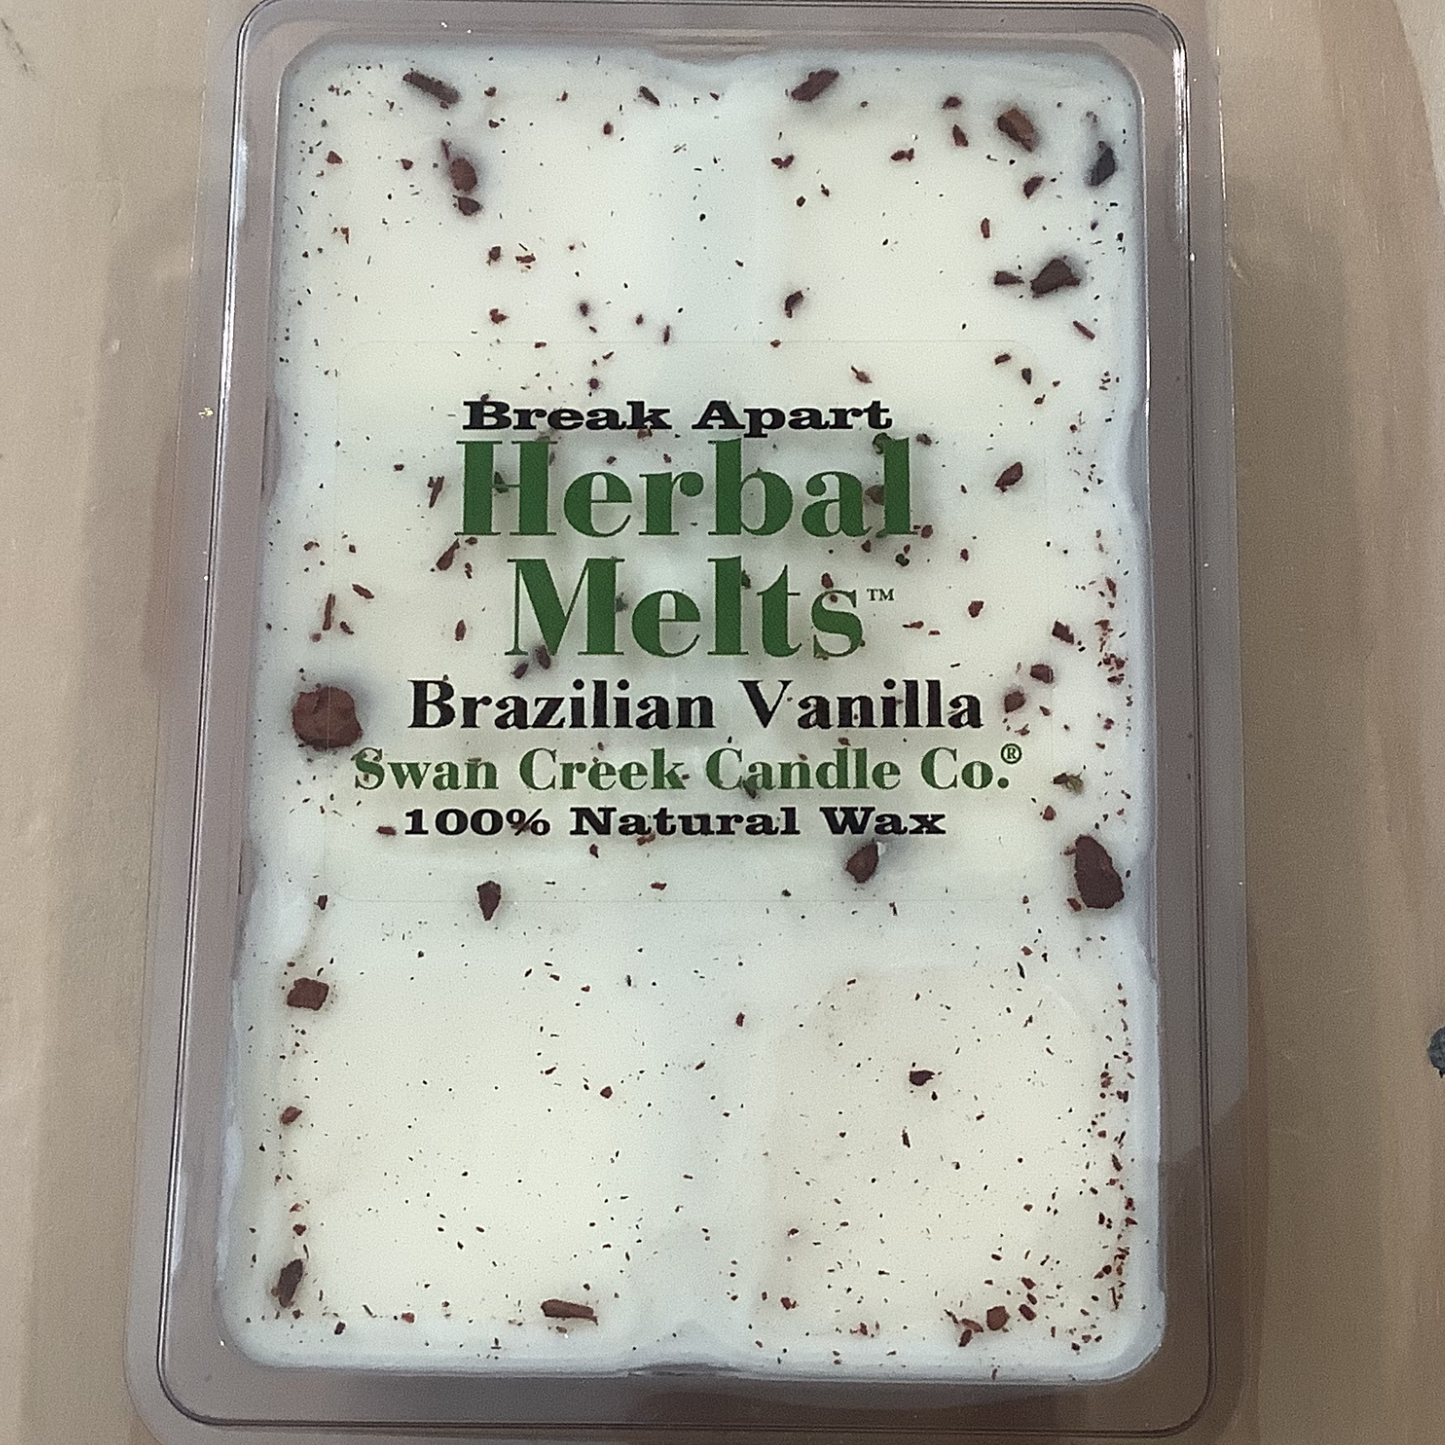 Brazilian Vanilla Herbal Melts